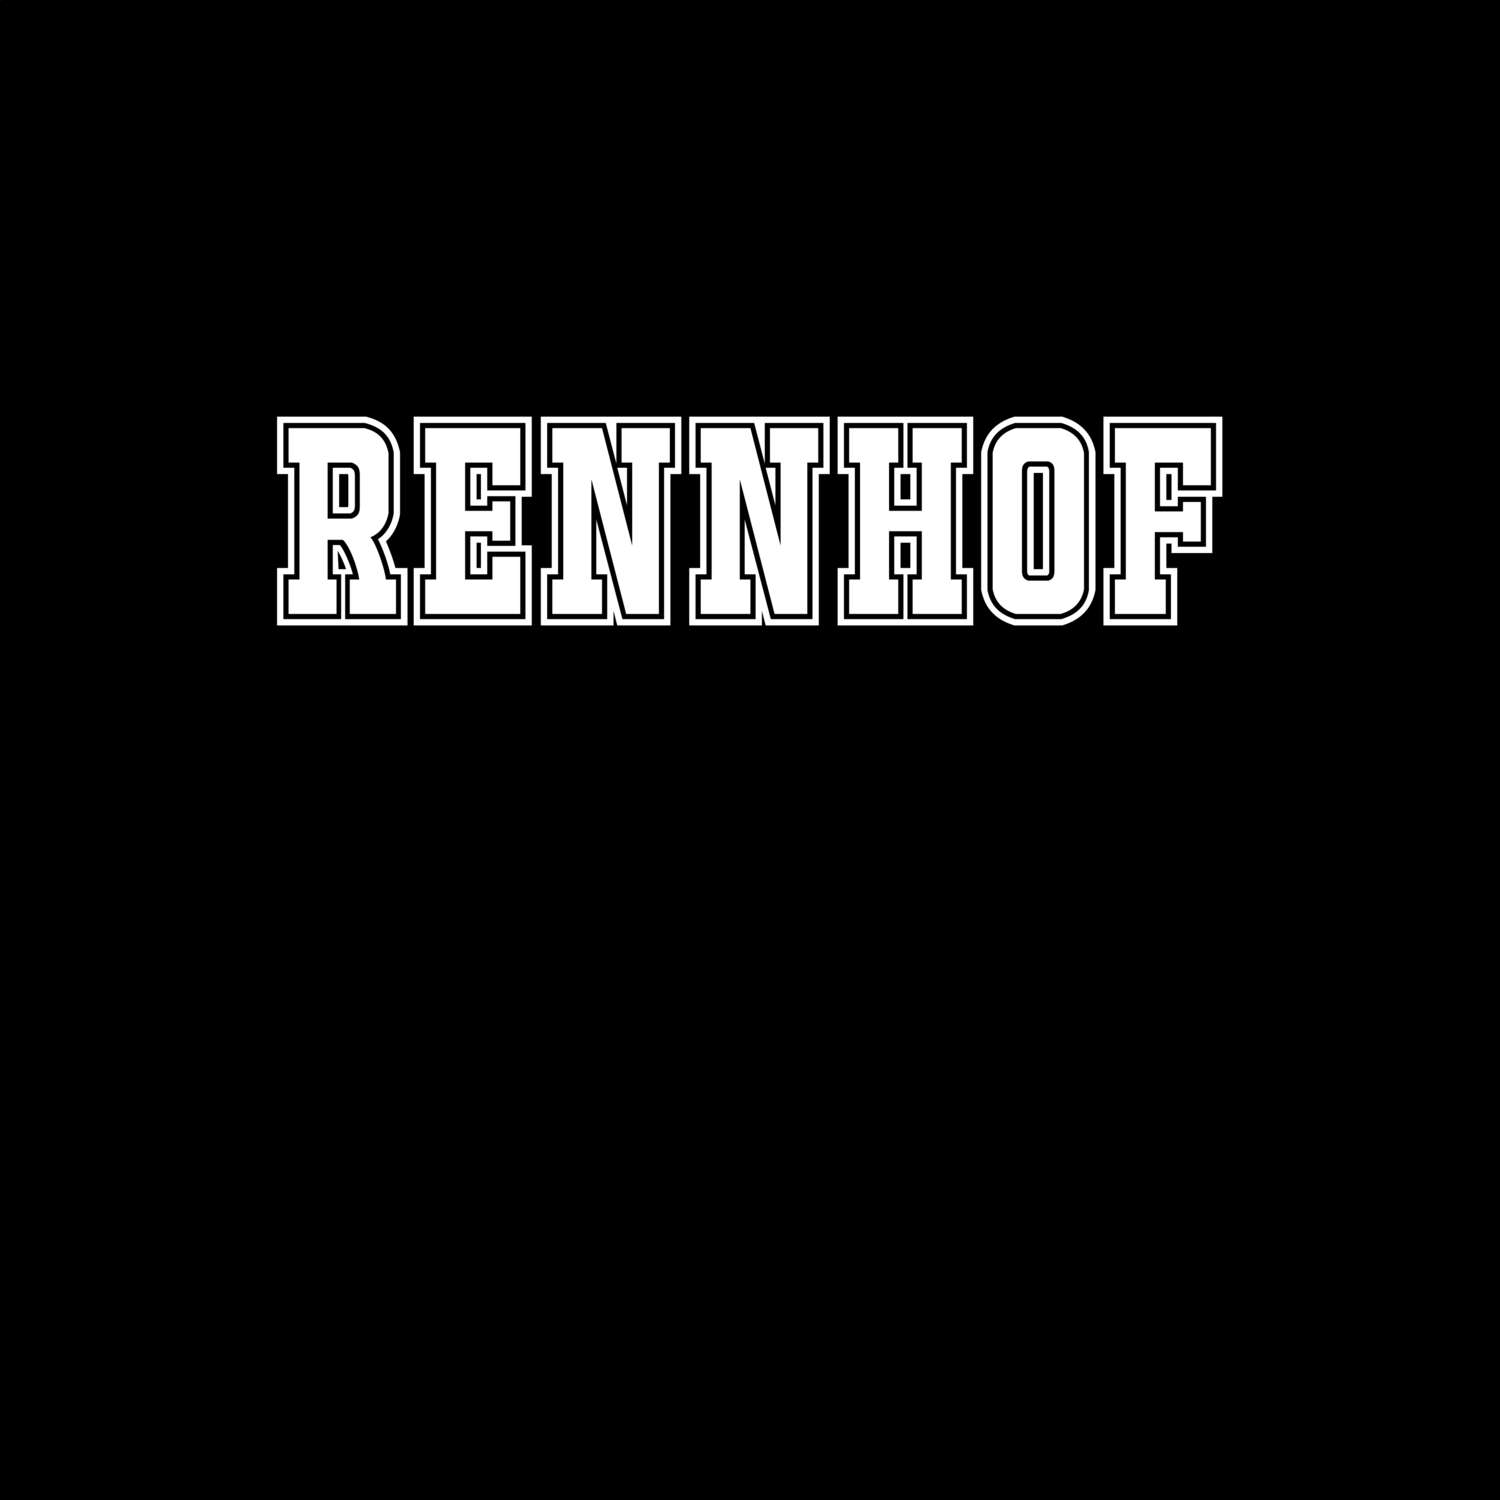 Rennhof T-Shirt »Classic«